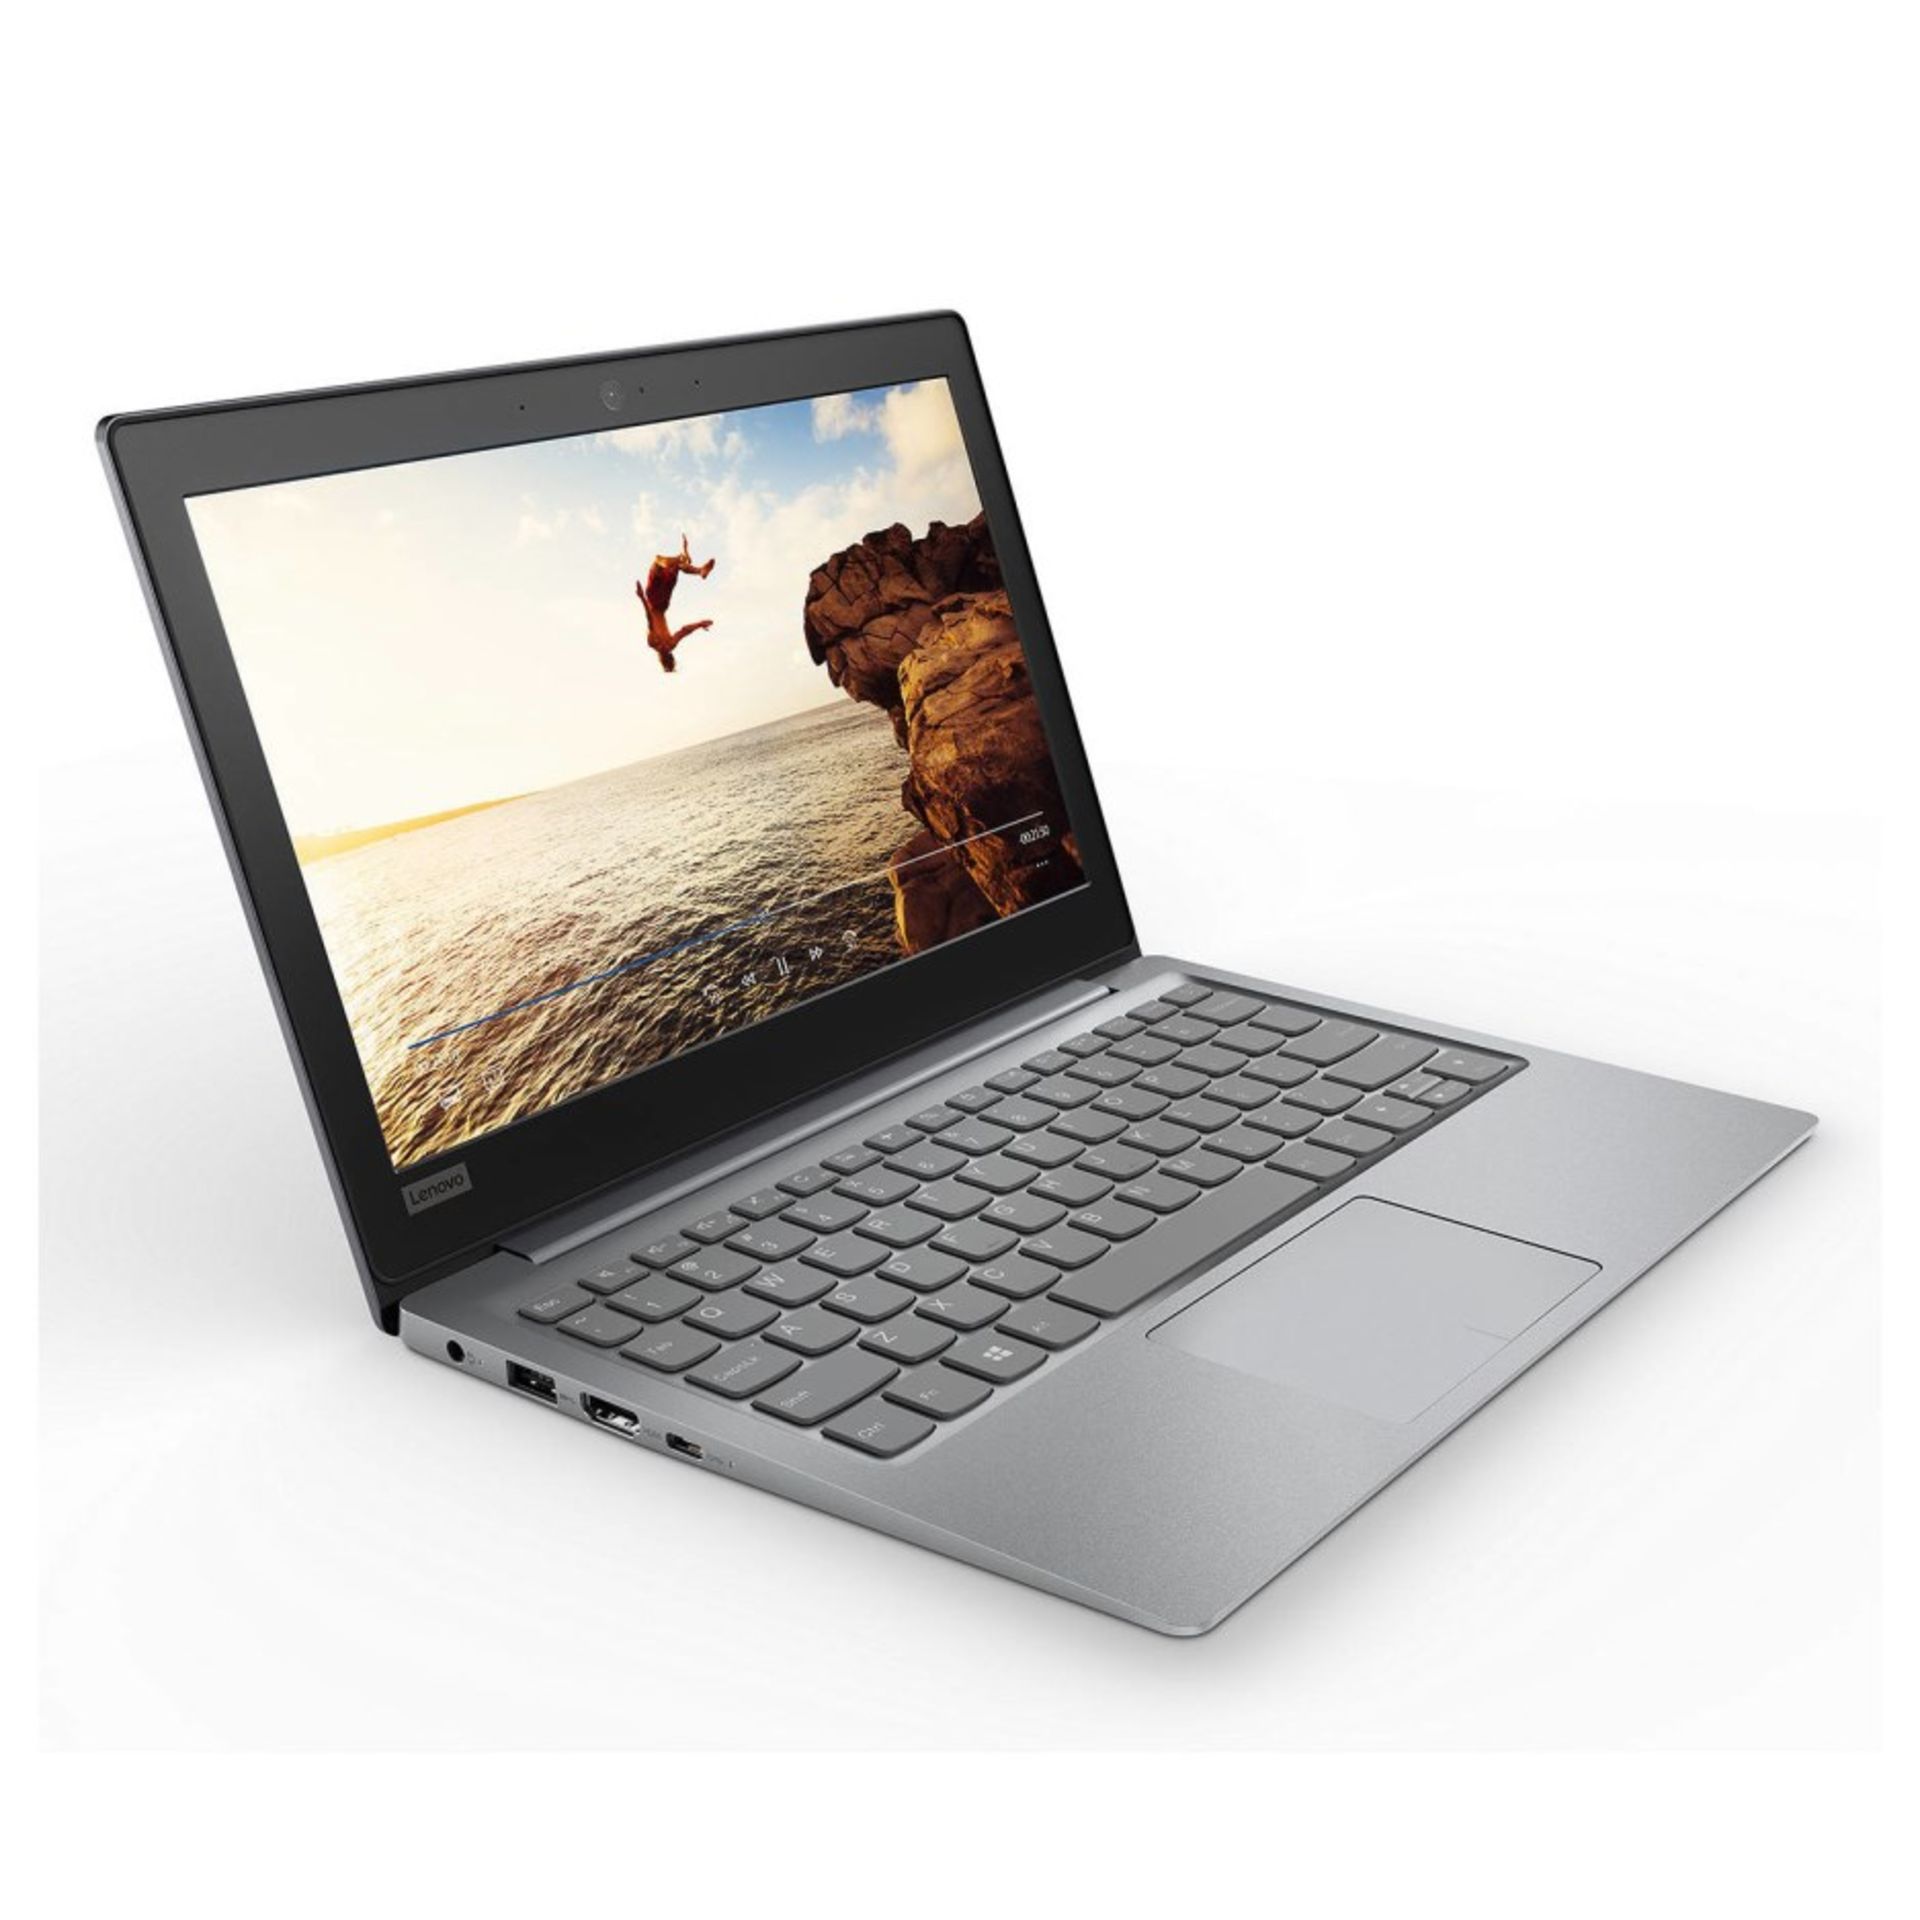 (22) 1 x Grade B - Lenovo Ideapad 110S SILVER- 11.6" Light Weight Laptop Intel Dual Core, 32GB - Image 6 of 6